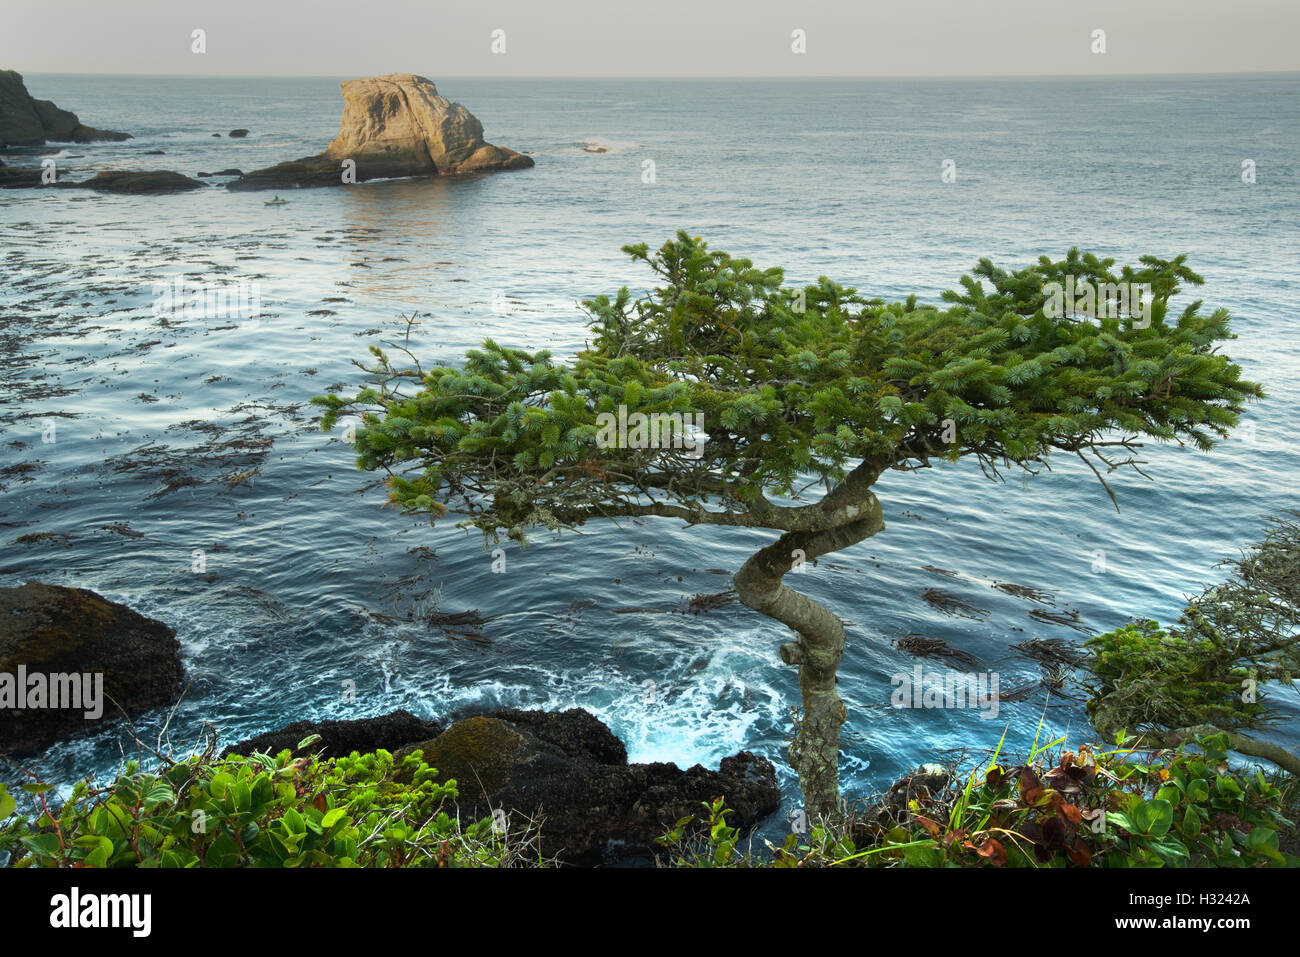 Sea stack and gnarled tree, Cape Flattery, NW tip of 48 states, Olympic Peninsula, Washington Stock Photo